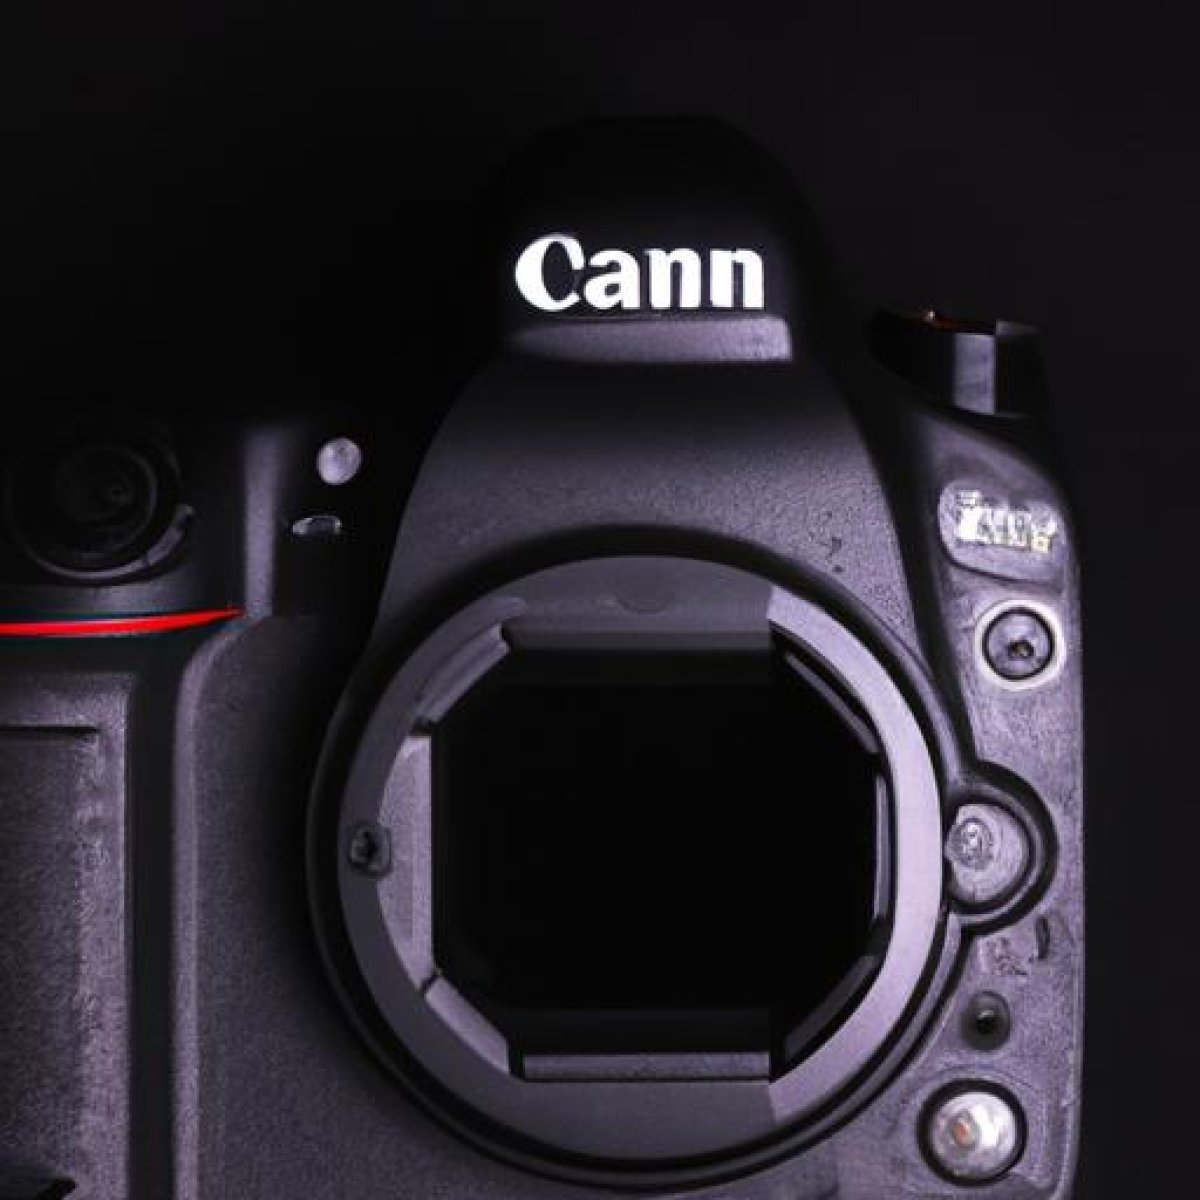 Dslr camera canon 5d mark iii